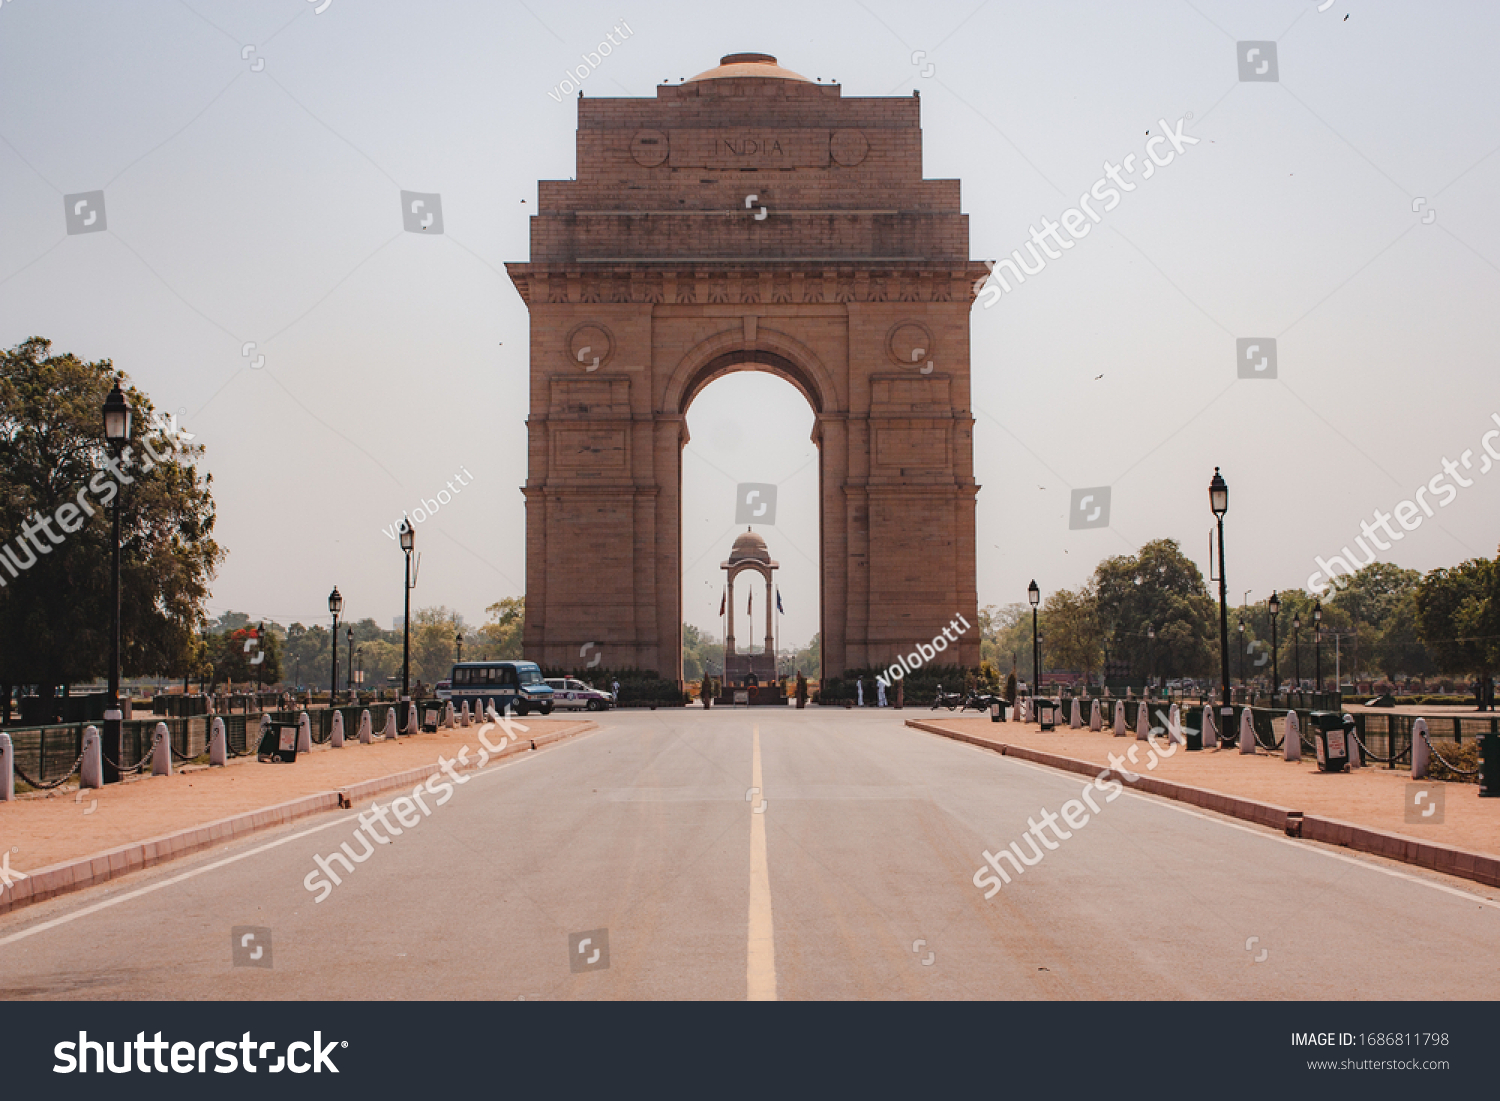 Empty area due to quarantine lockdown in front of India Gate in New Delhi #1686811798